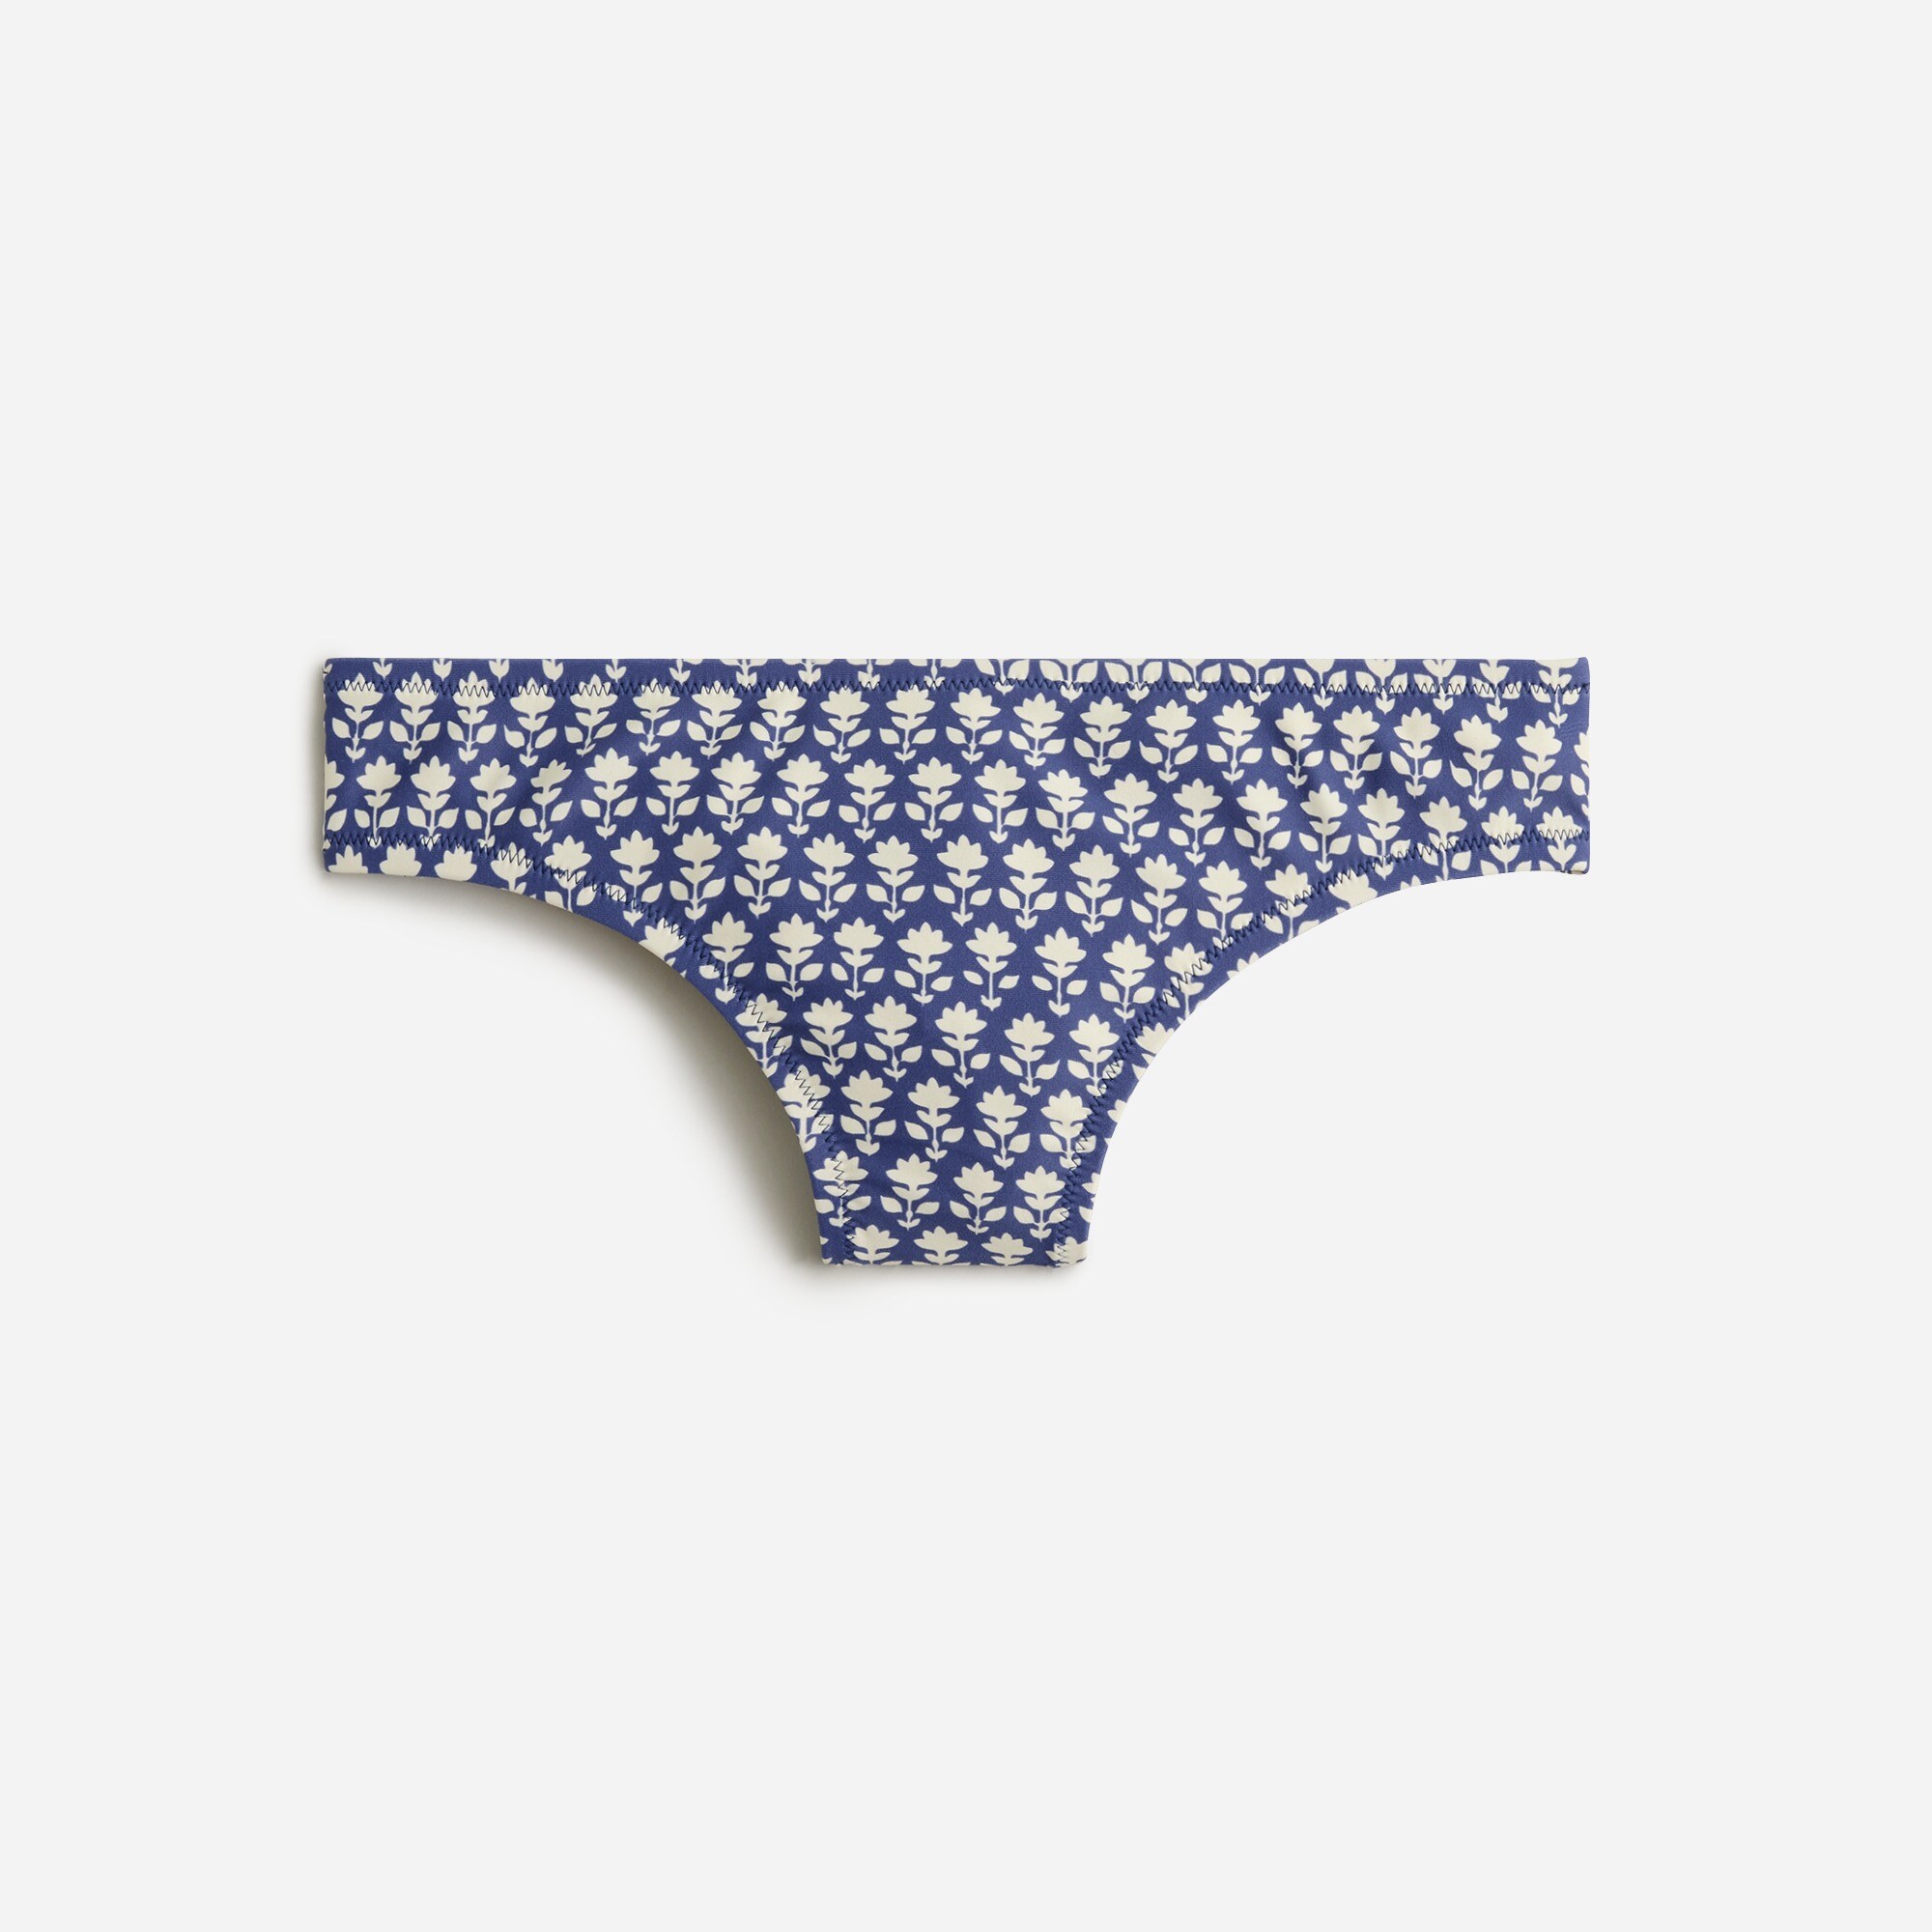  Hipster full-coverage bikini bottom in blue stamp floral